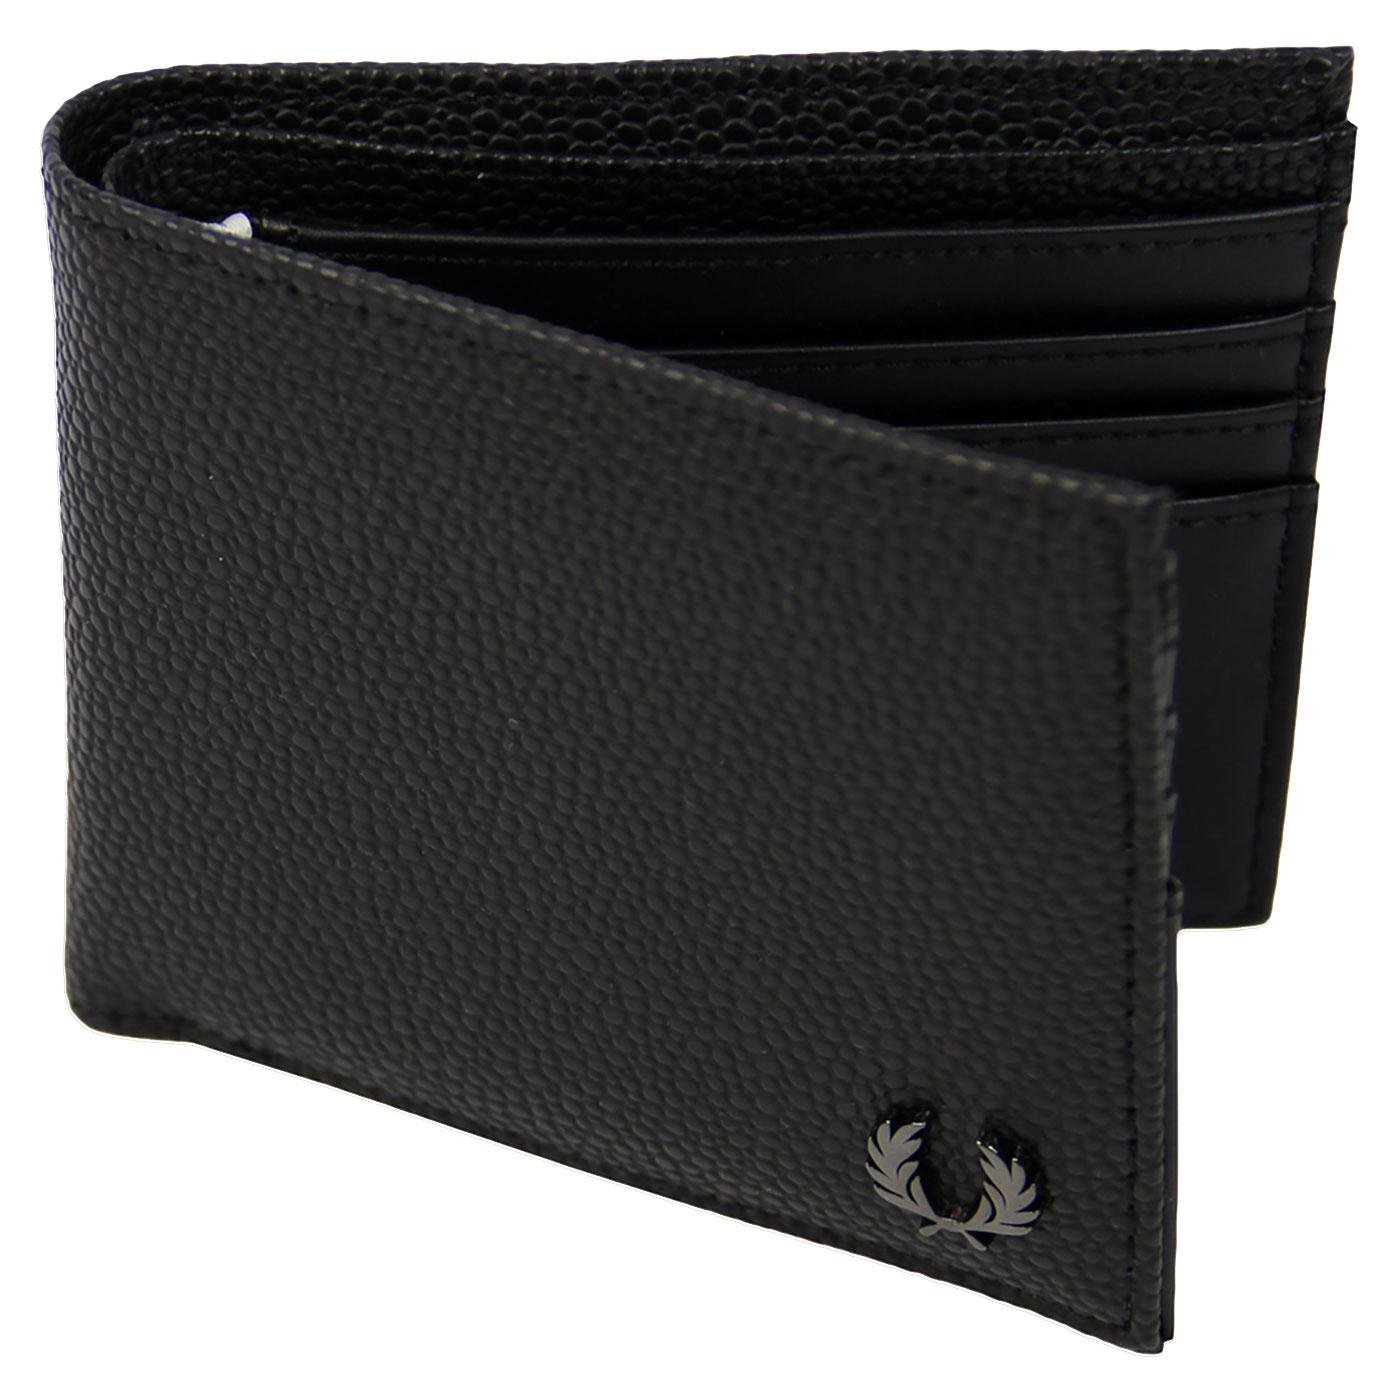 FRED PERRY Scotch Grain Leather Bi-Fold Wallet B